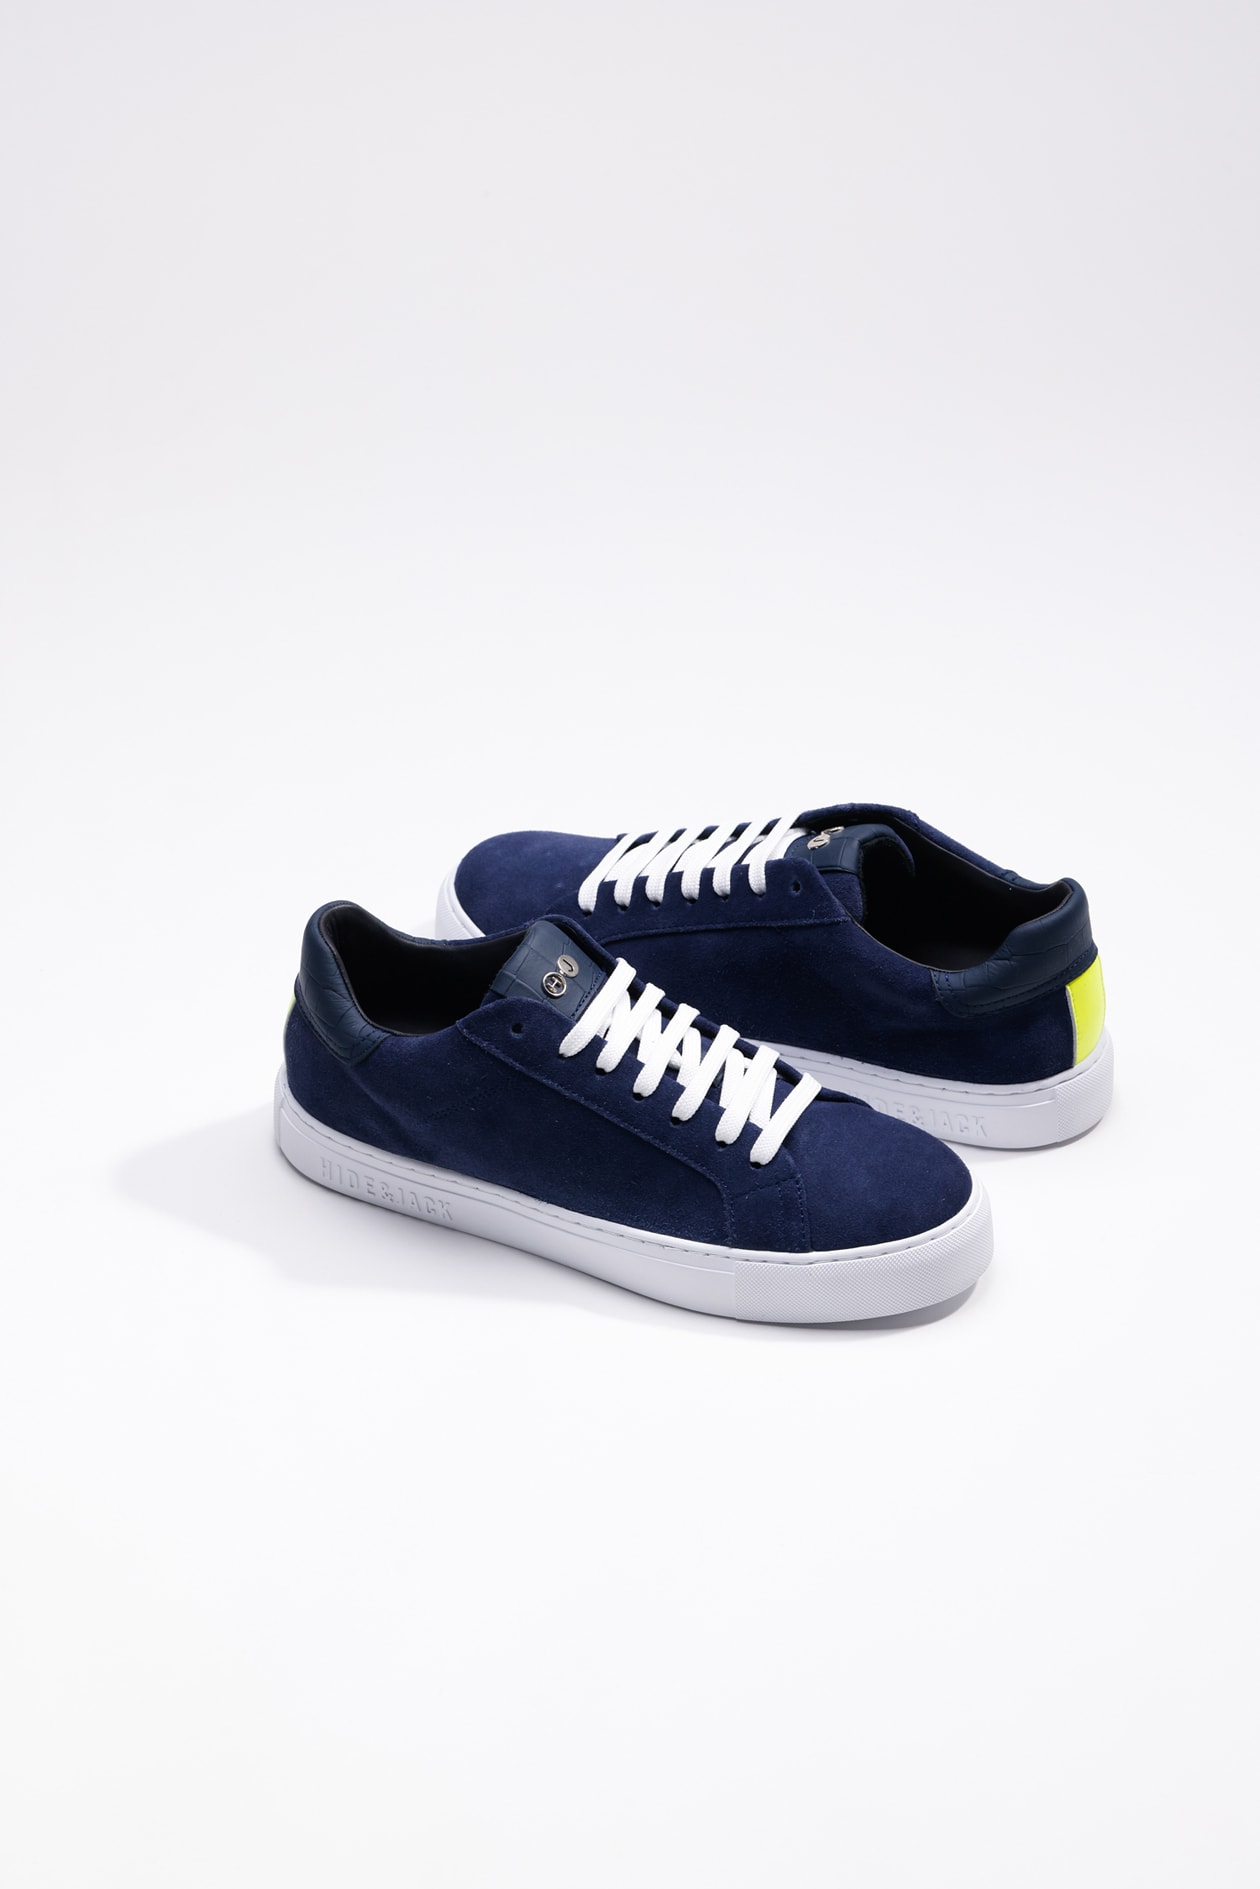 Hide&amp;jack Low Top Sneaker - Essence Oil Blue White